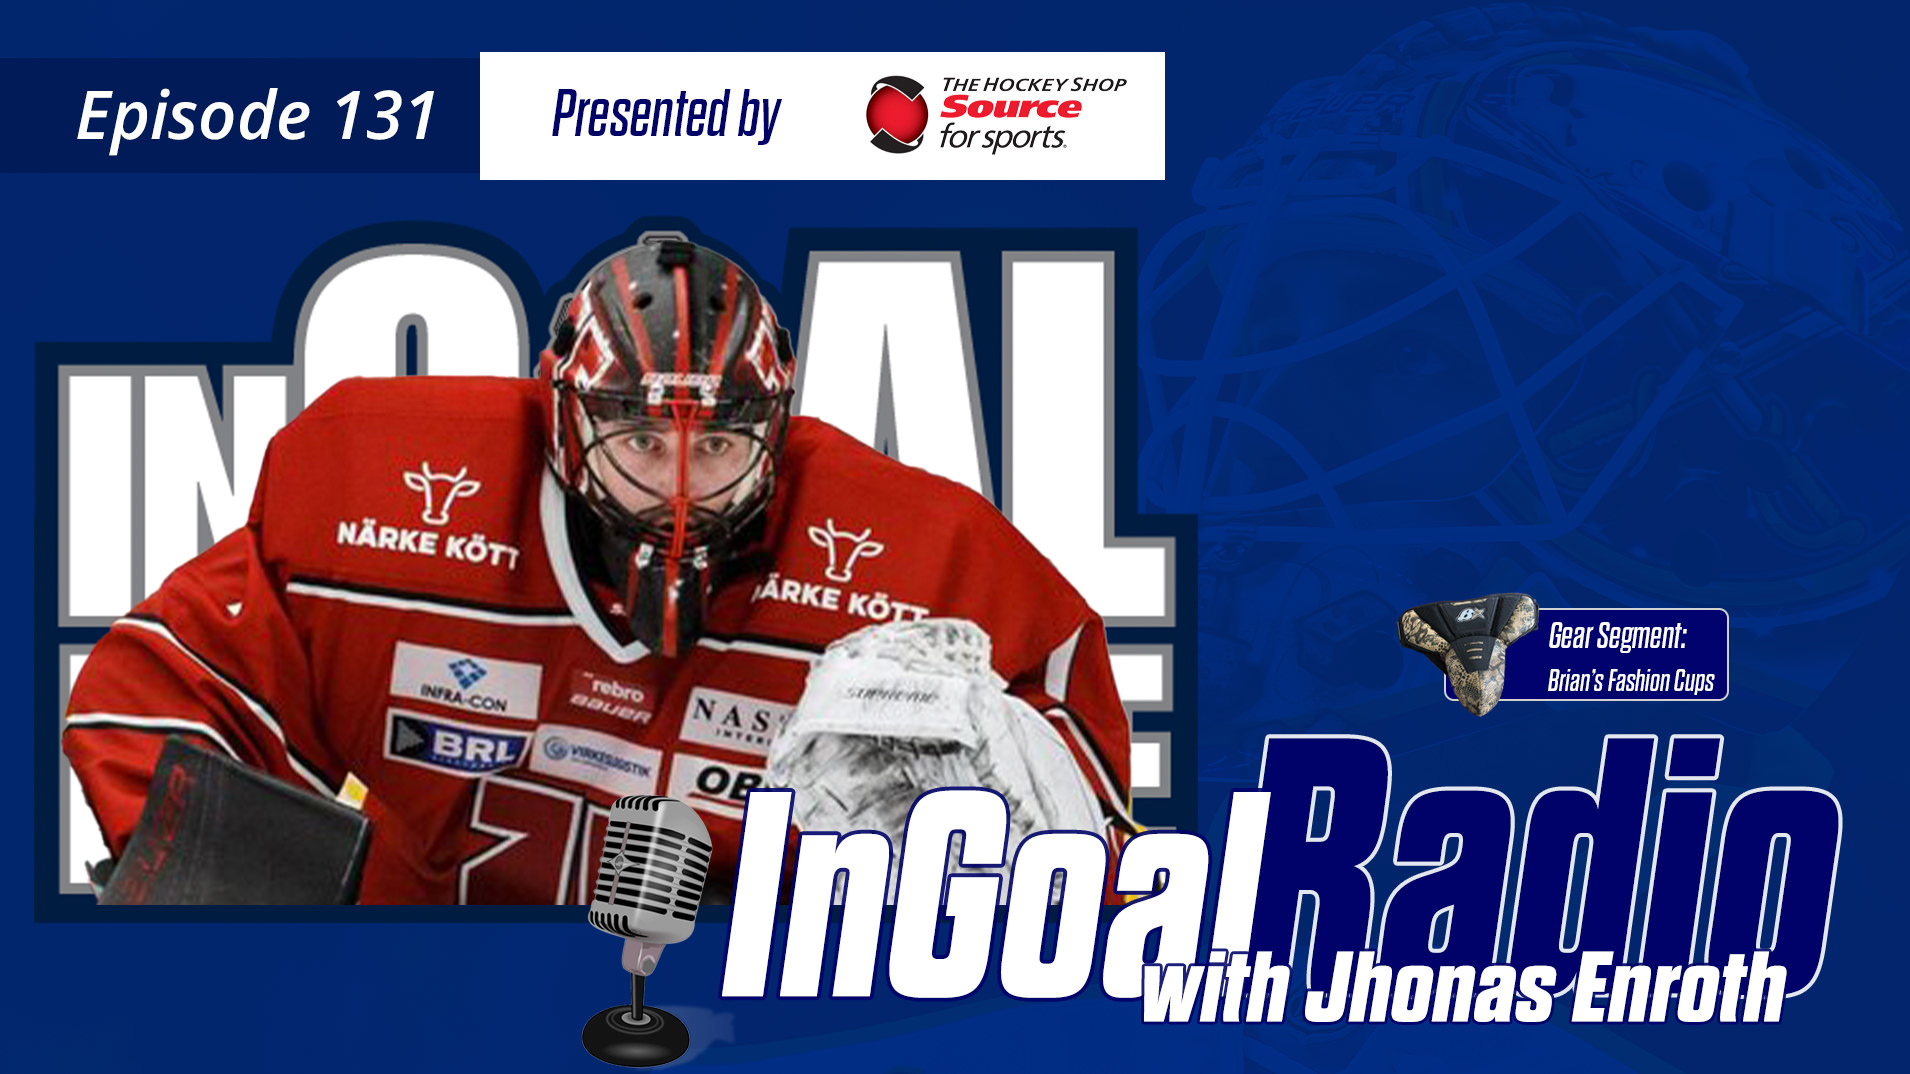 InGoal Radio Episode 131with Jhonas Enroth